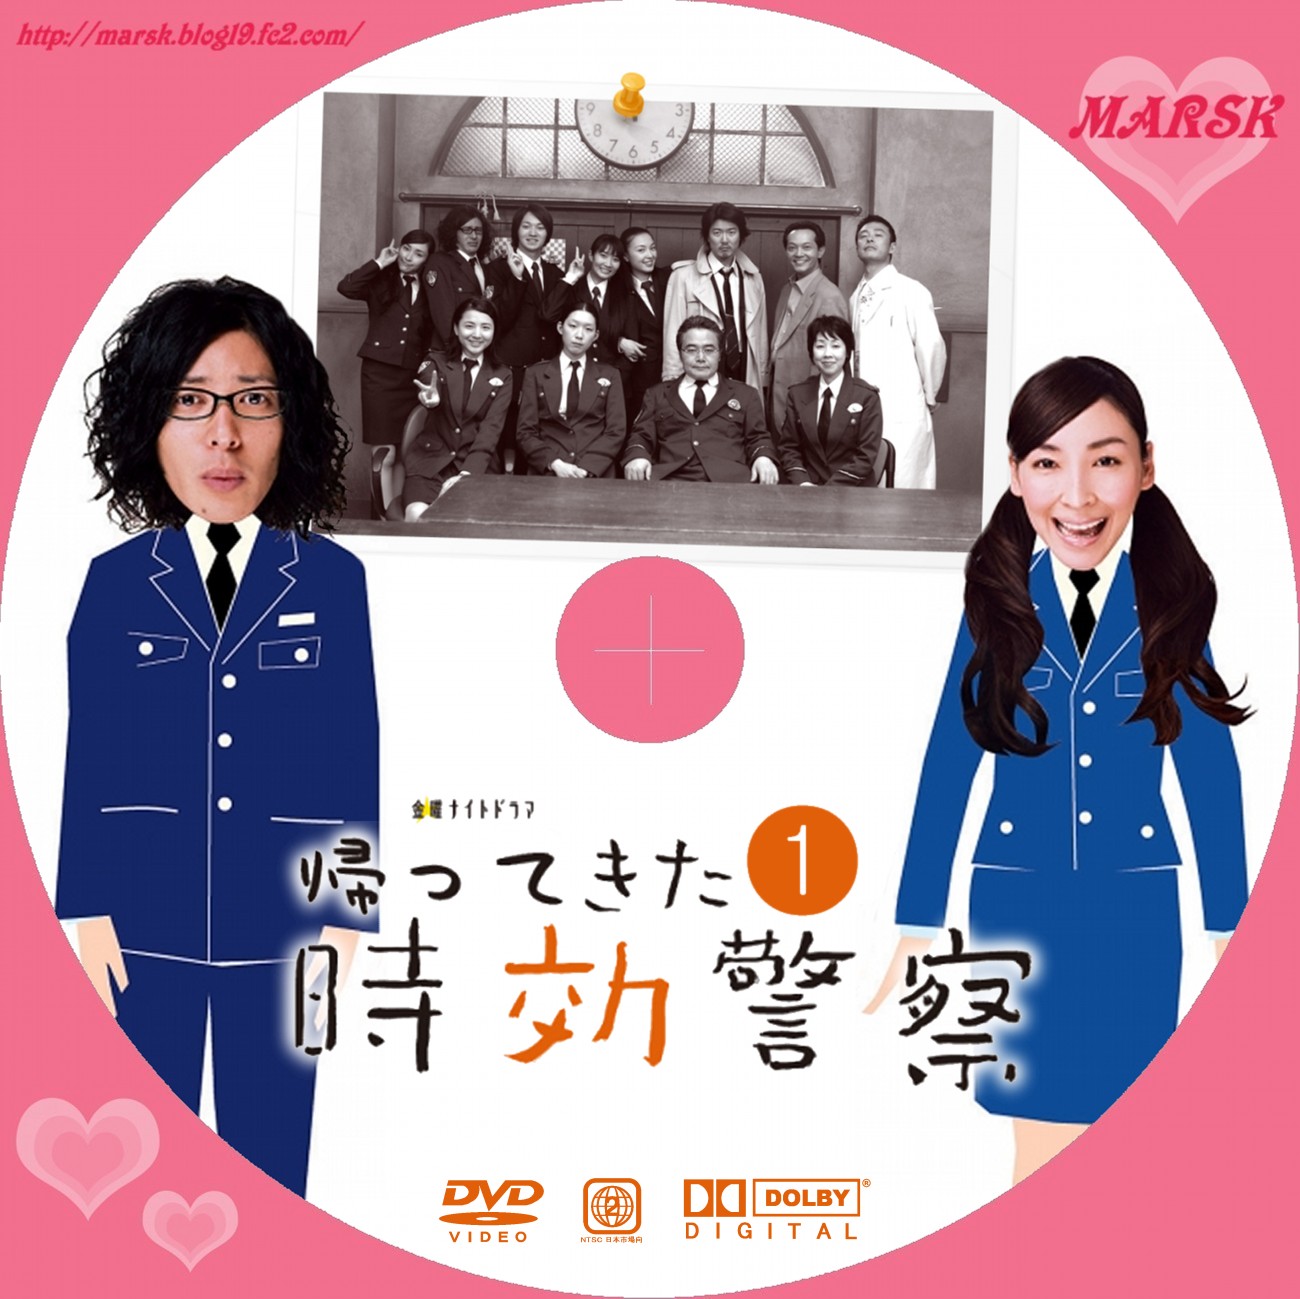 DVD-BOX【時効警察】【帰ってきた時効警察】の+sangishop.com